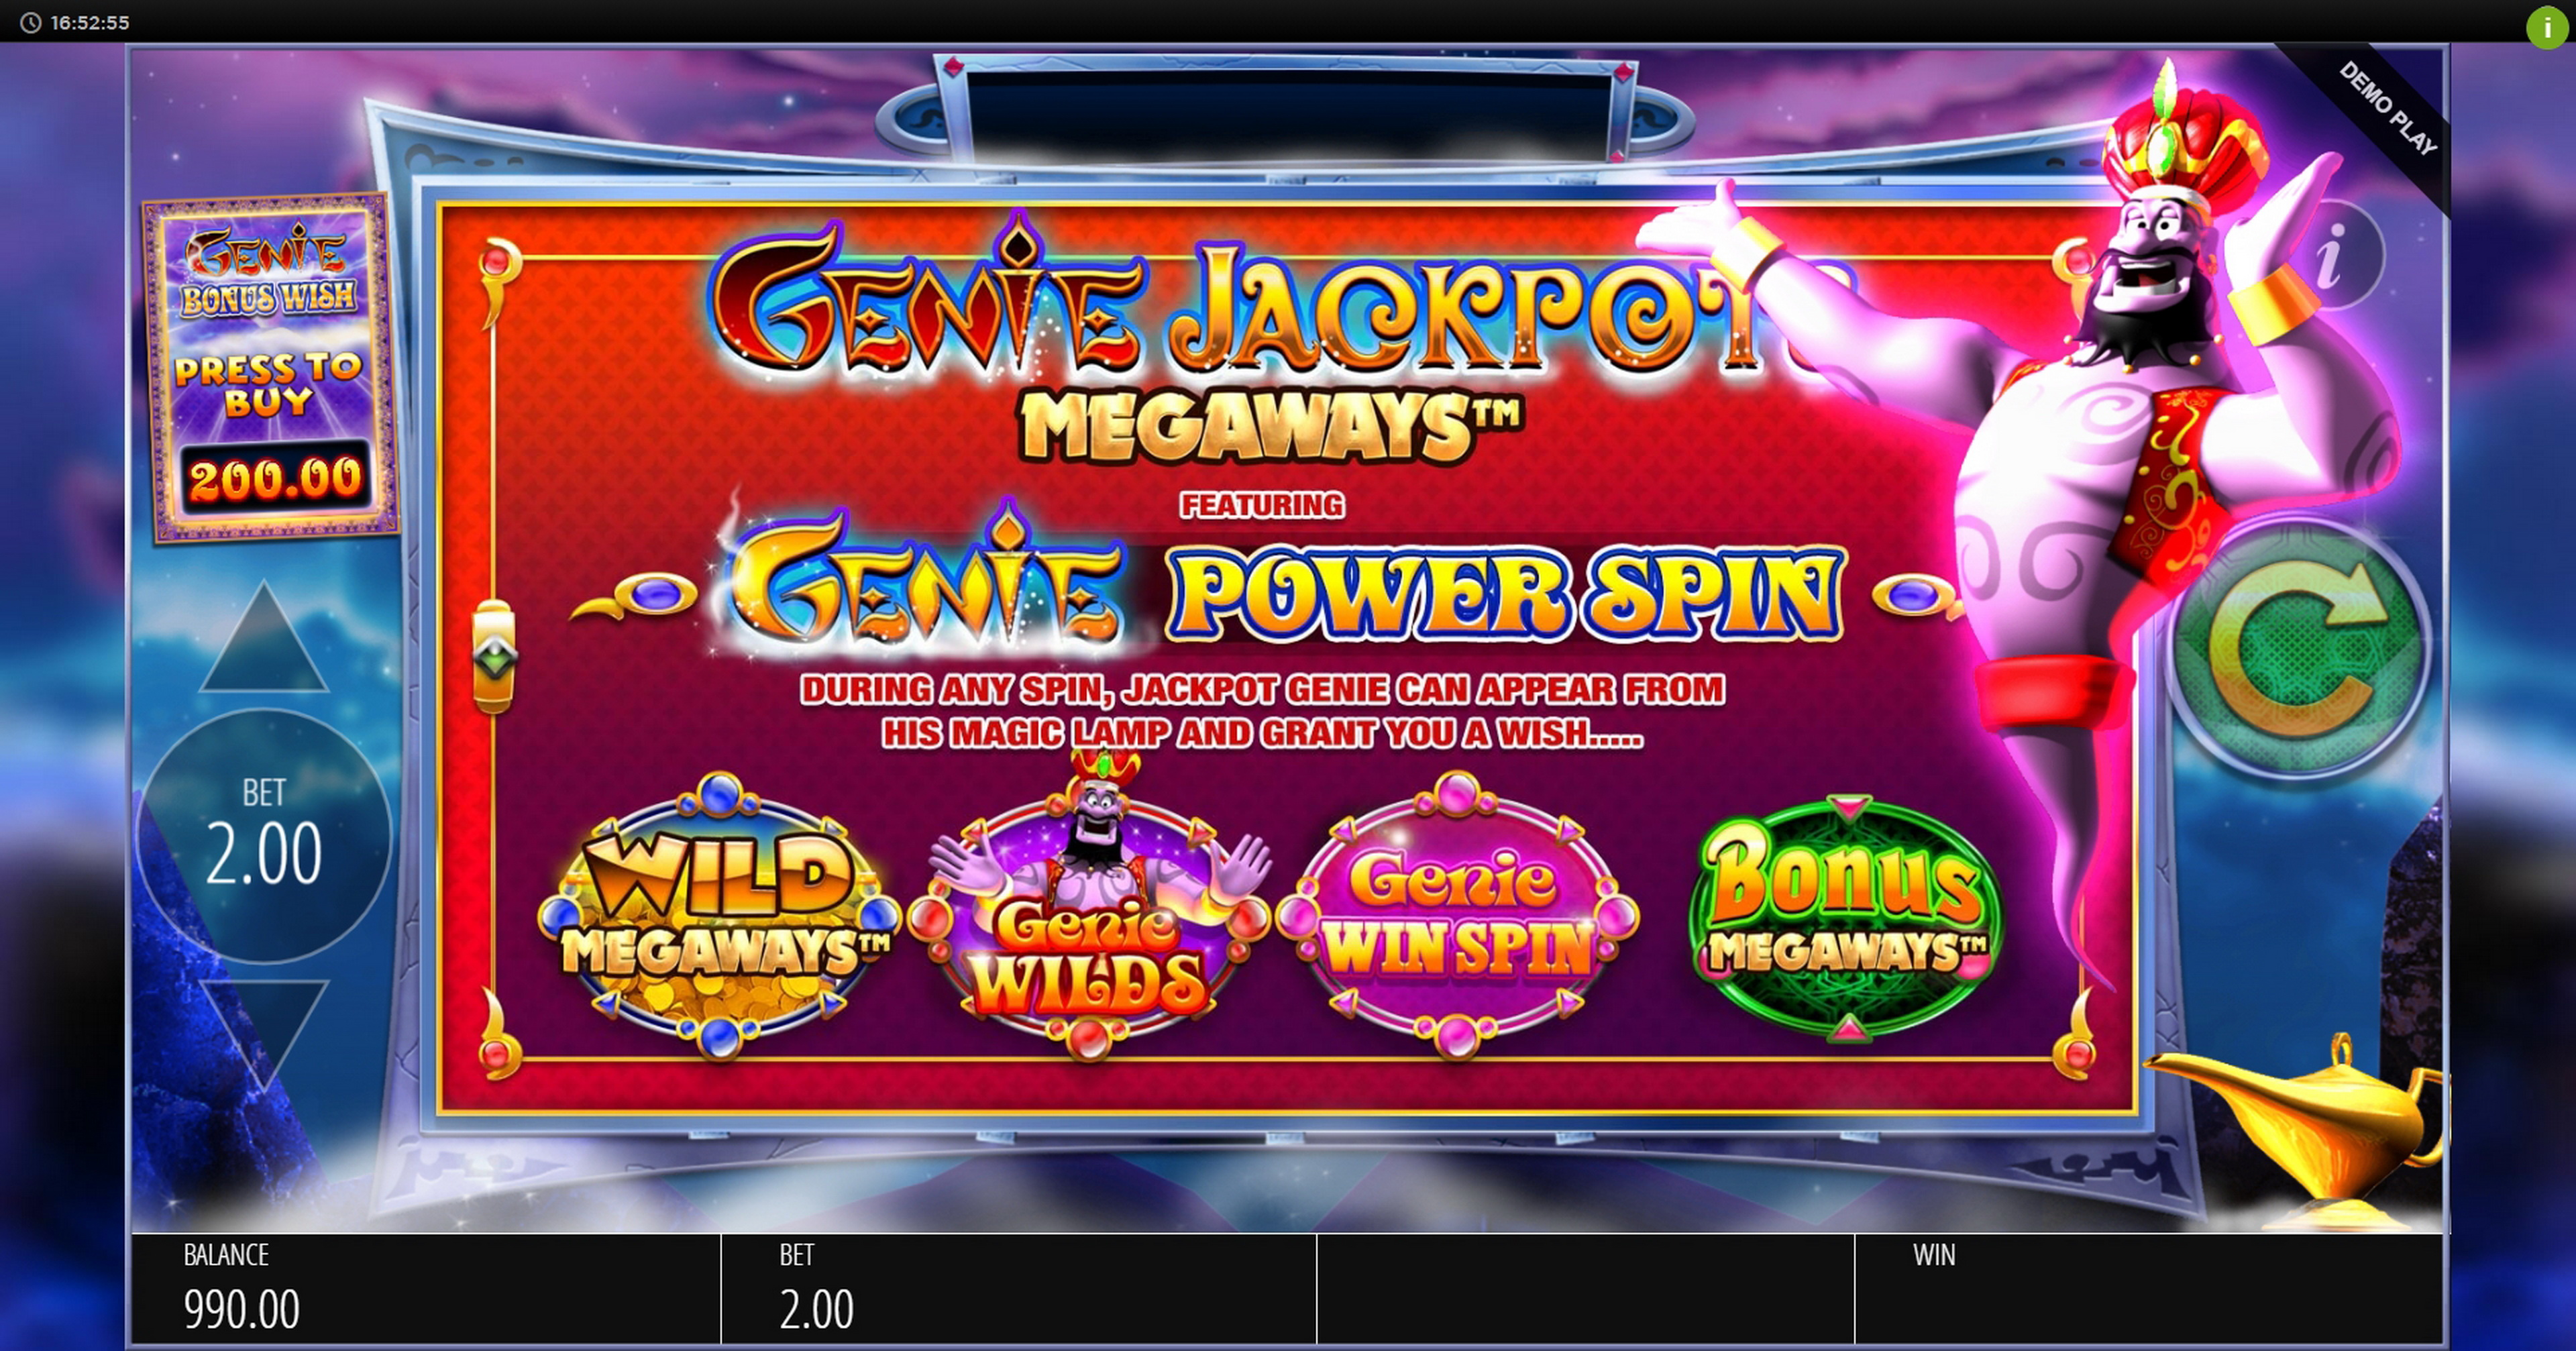 Play Genie Jackpots Megaways Free Casino Slot Game by Blueprint Gaming